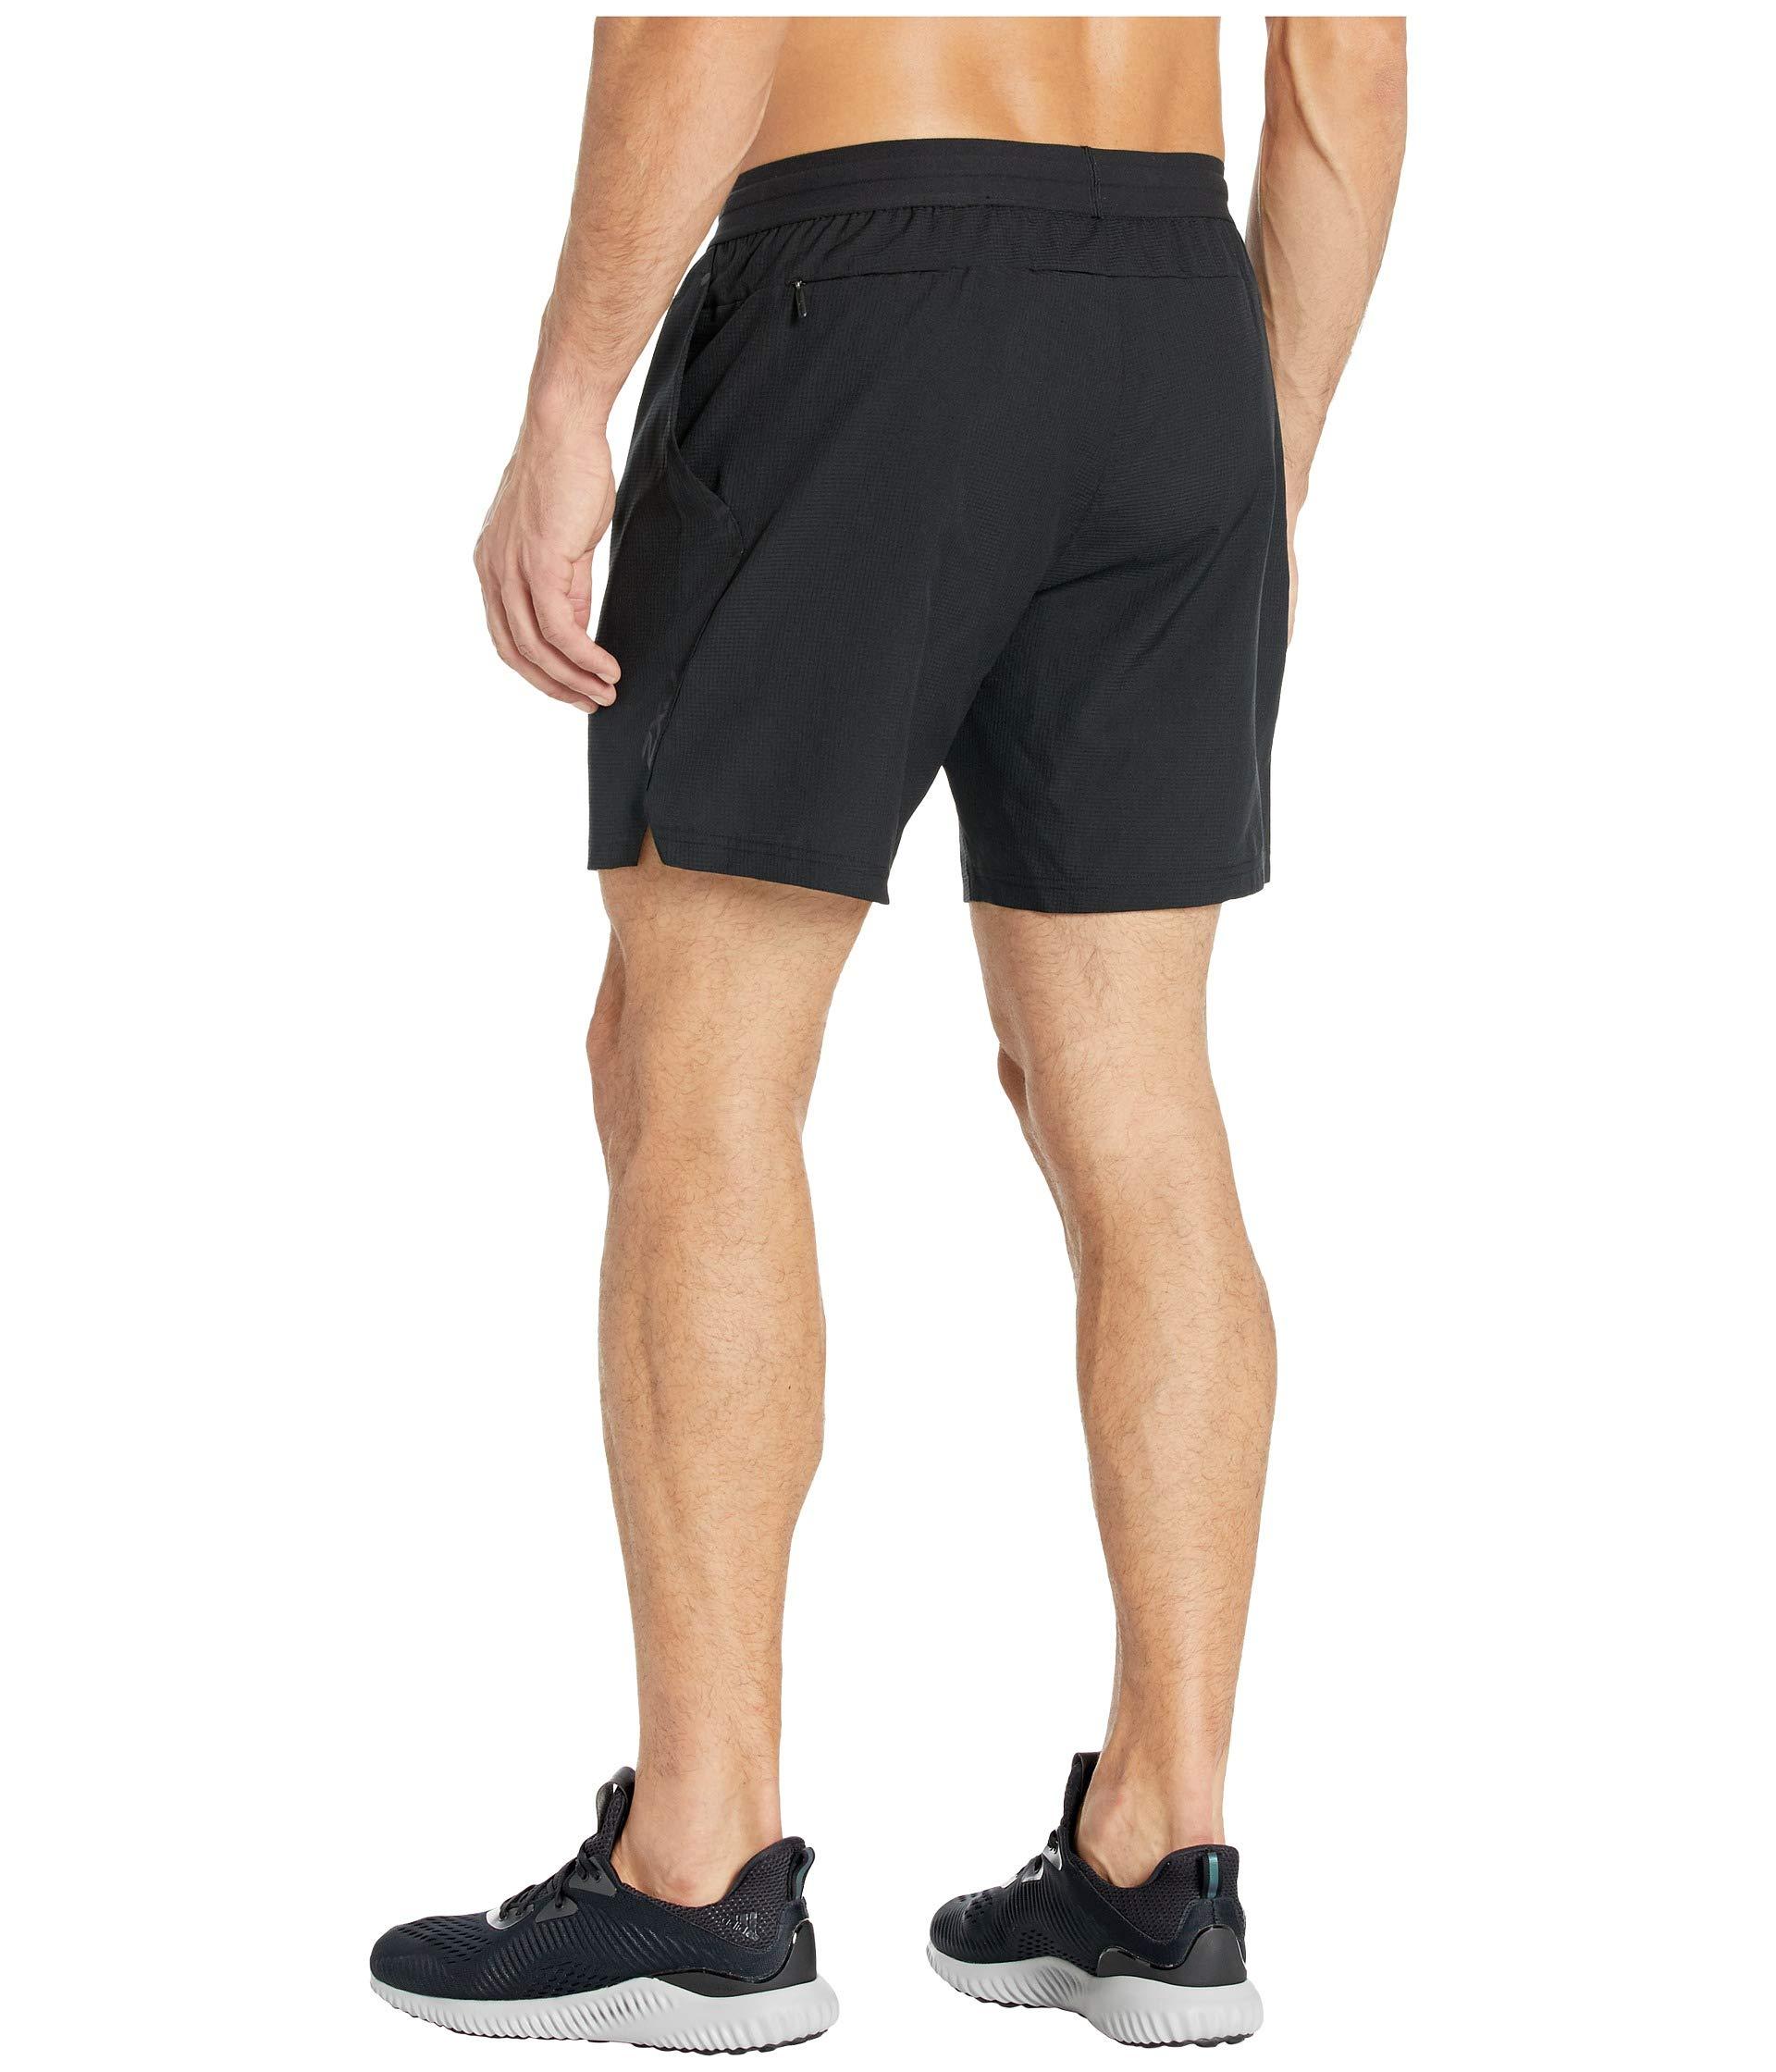 2XU Synthetic 7 Xctrl Woven Shorts in Black for Men - Lyst